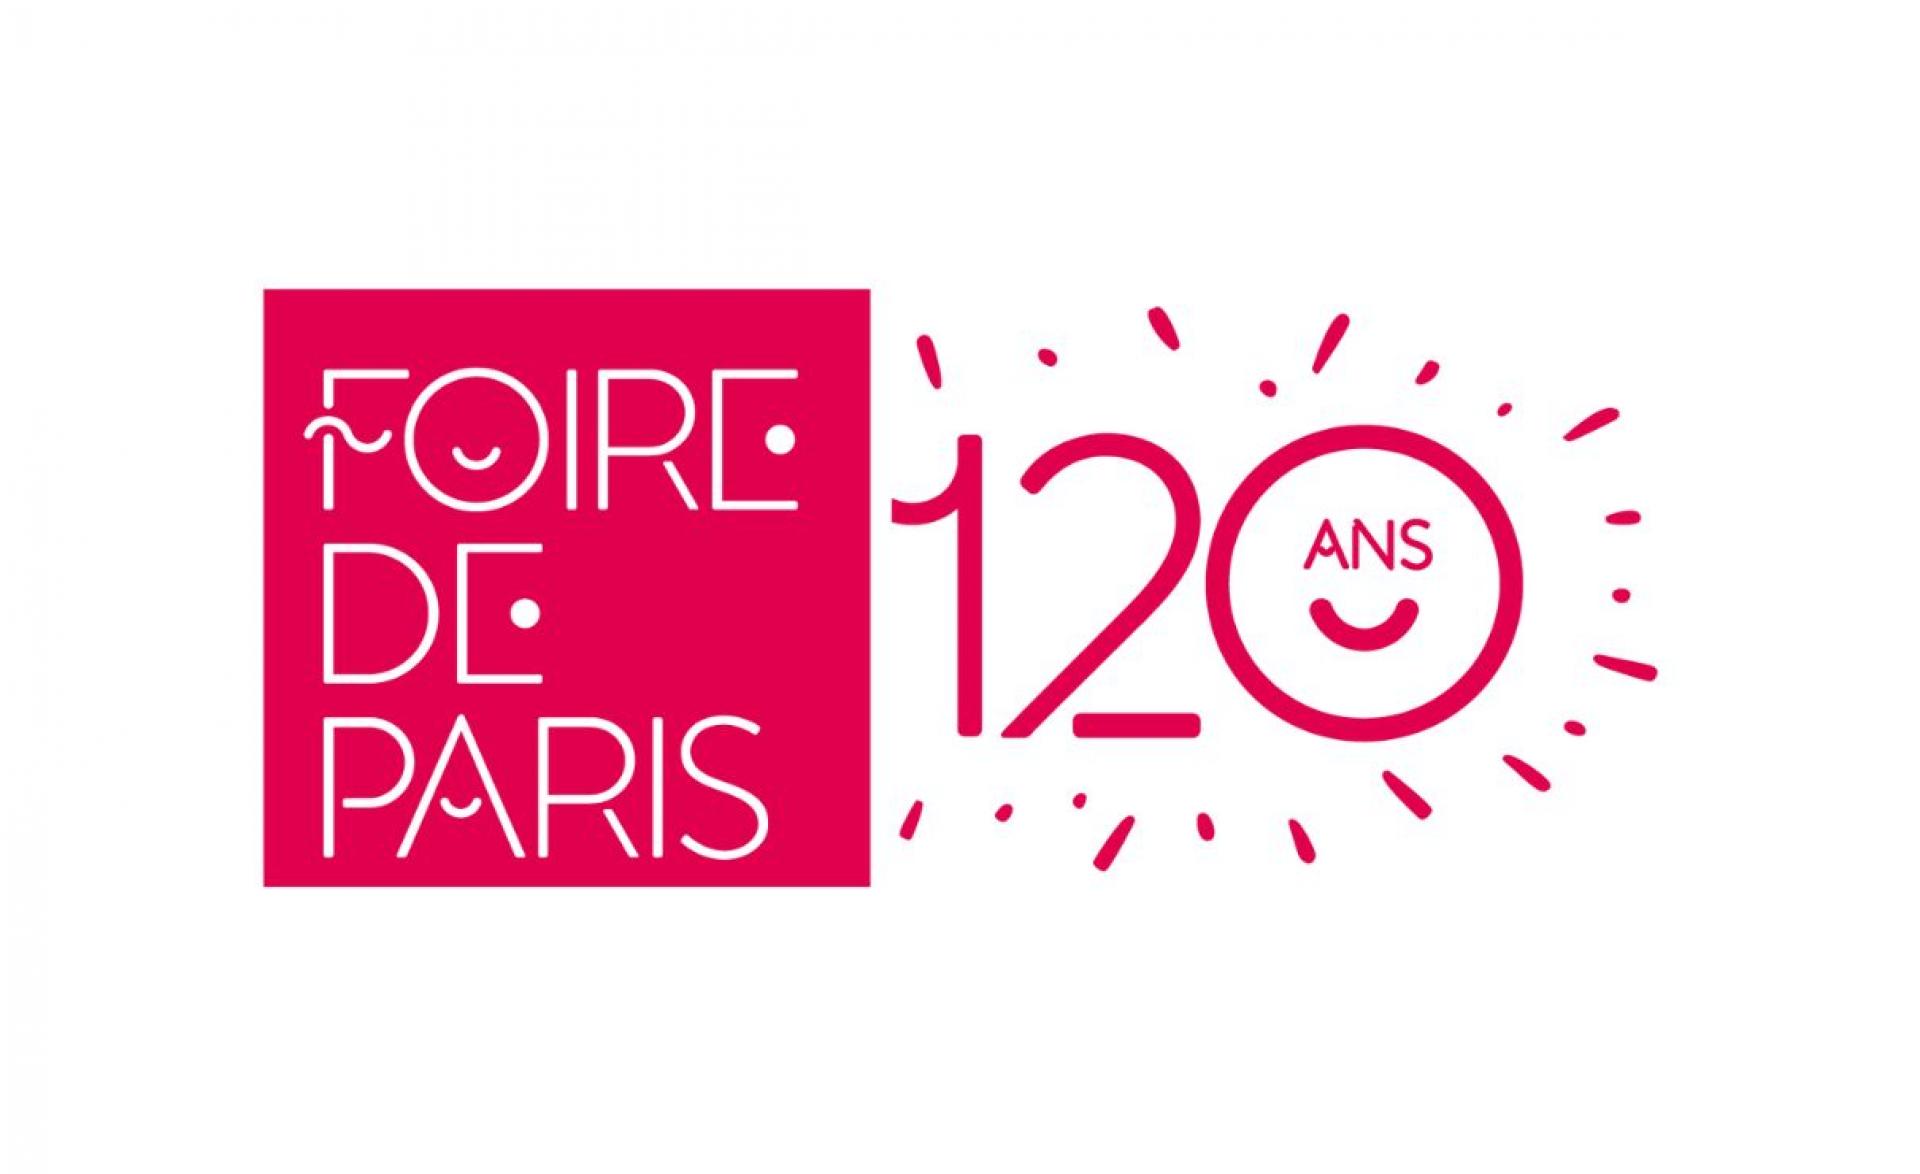 The 120th edition of the Foire de Paris is here!